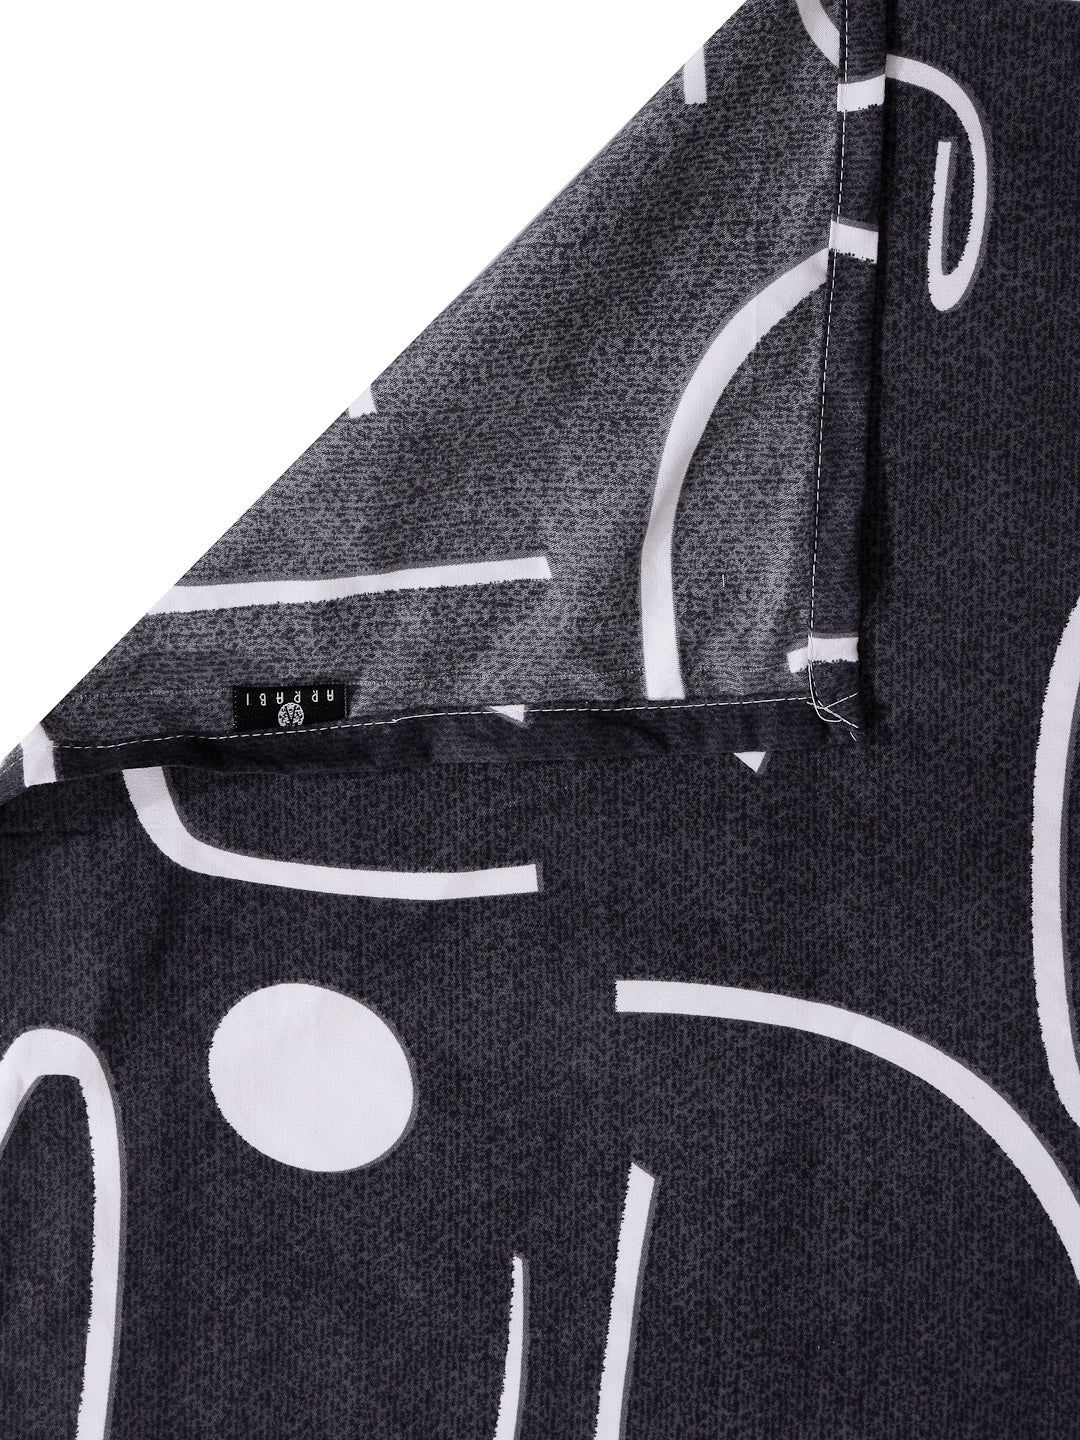 Arrabi Black Geometric Cotton Blend 6 SEATER Table Cover (180 x 130 cm)